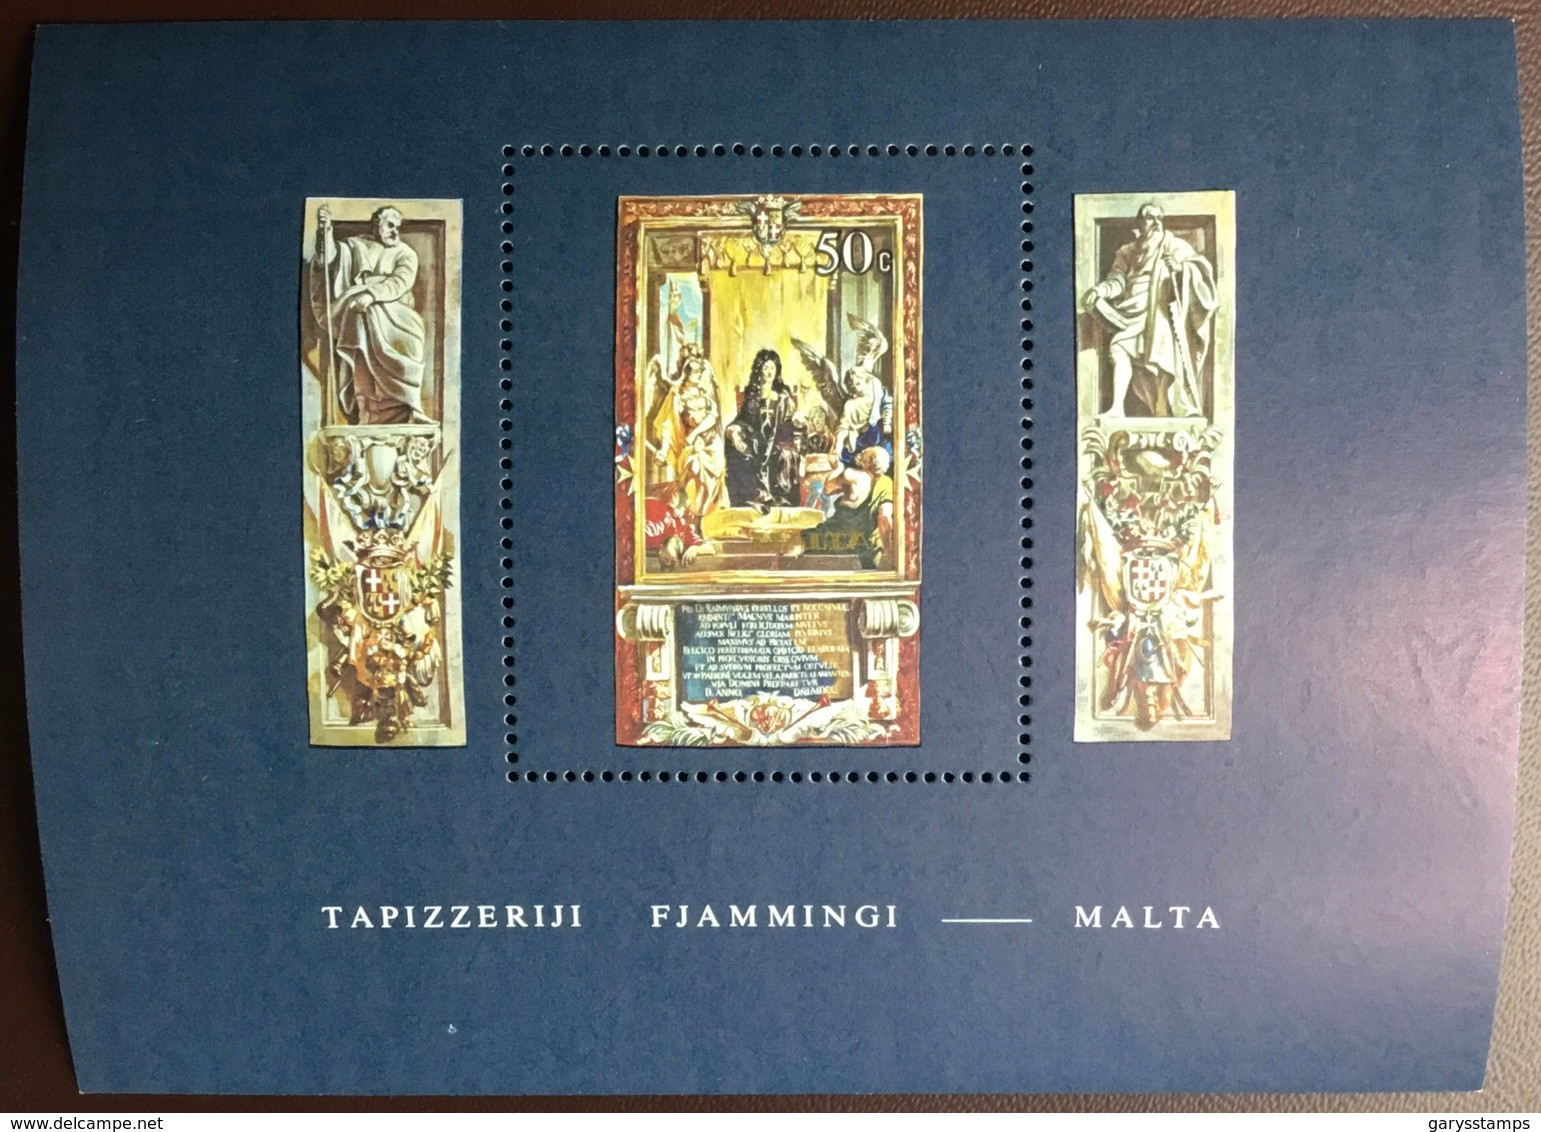 Malta 1980 Tapestries Minisheet MNH - Malta